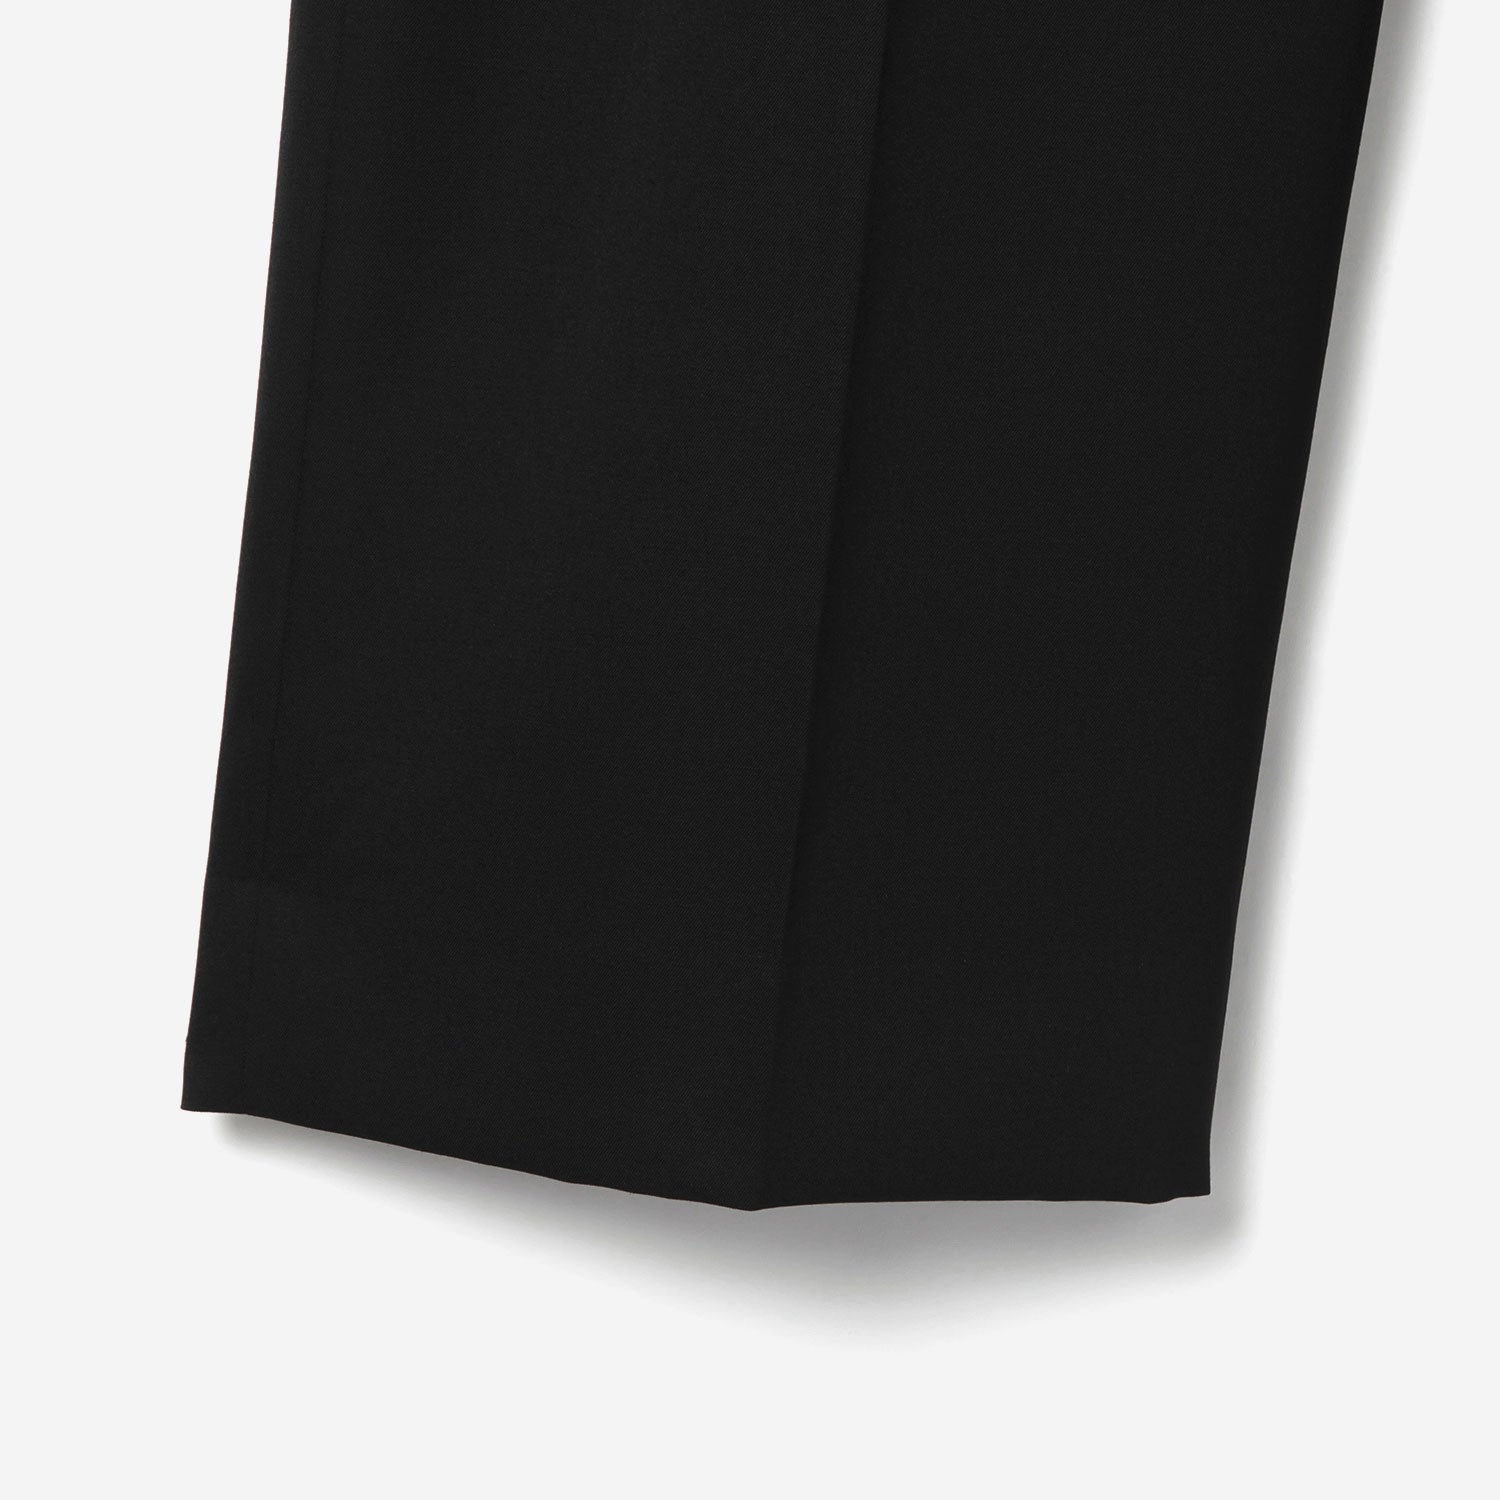 OSCAR / Super Semi-Wide Tailored Pants / black